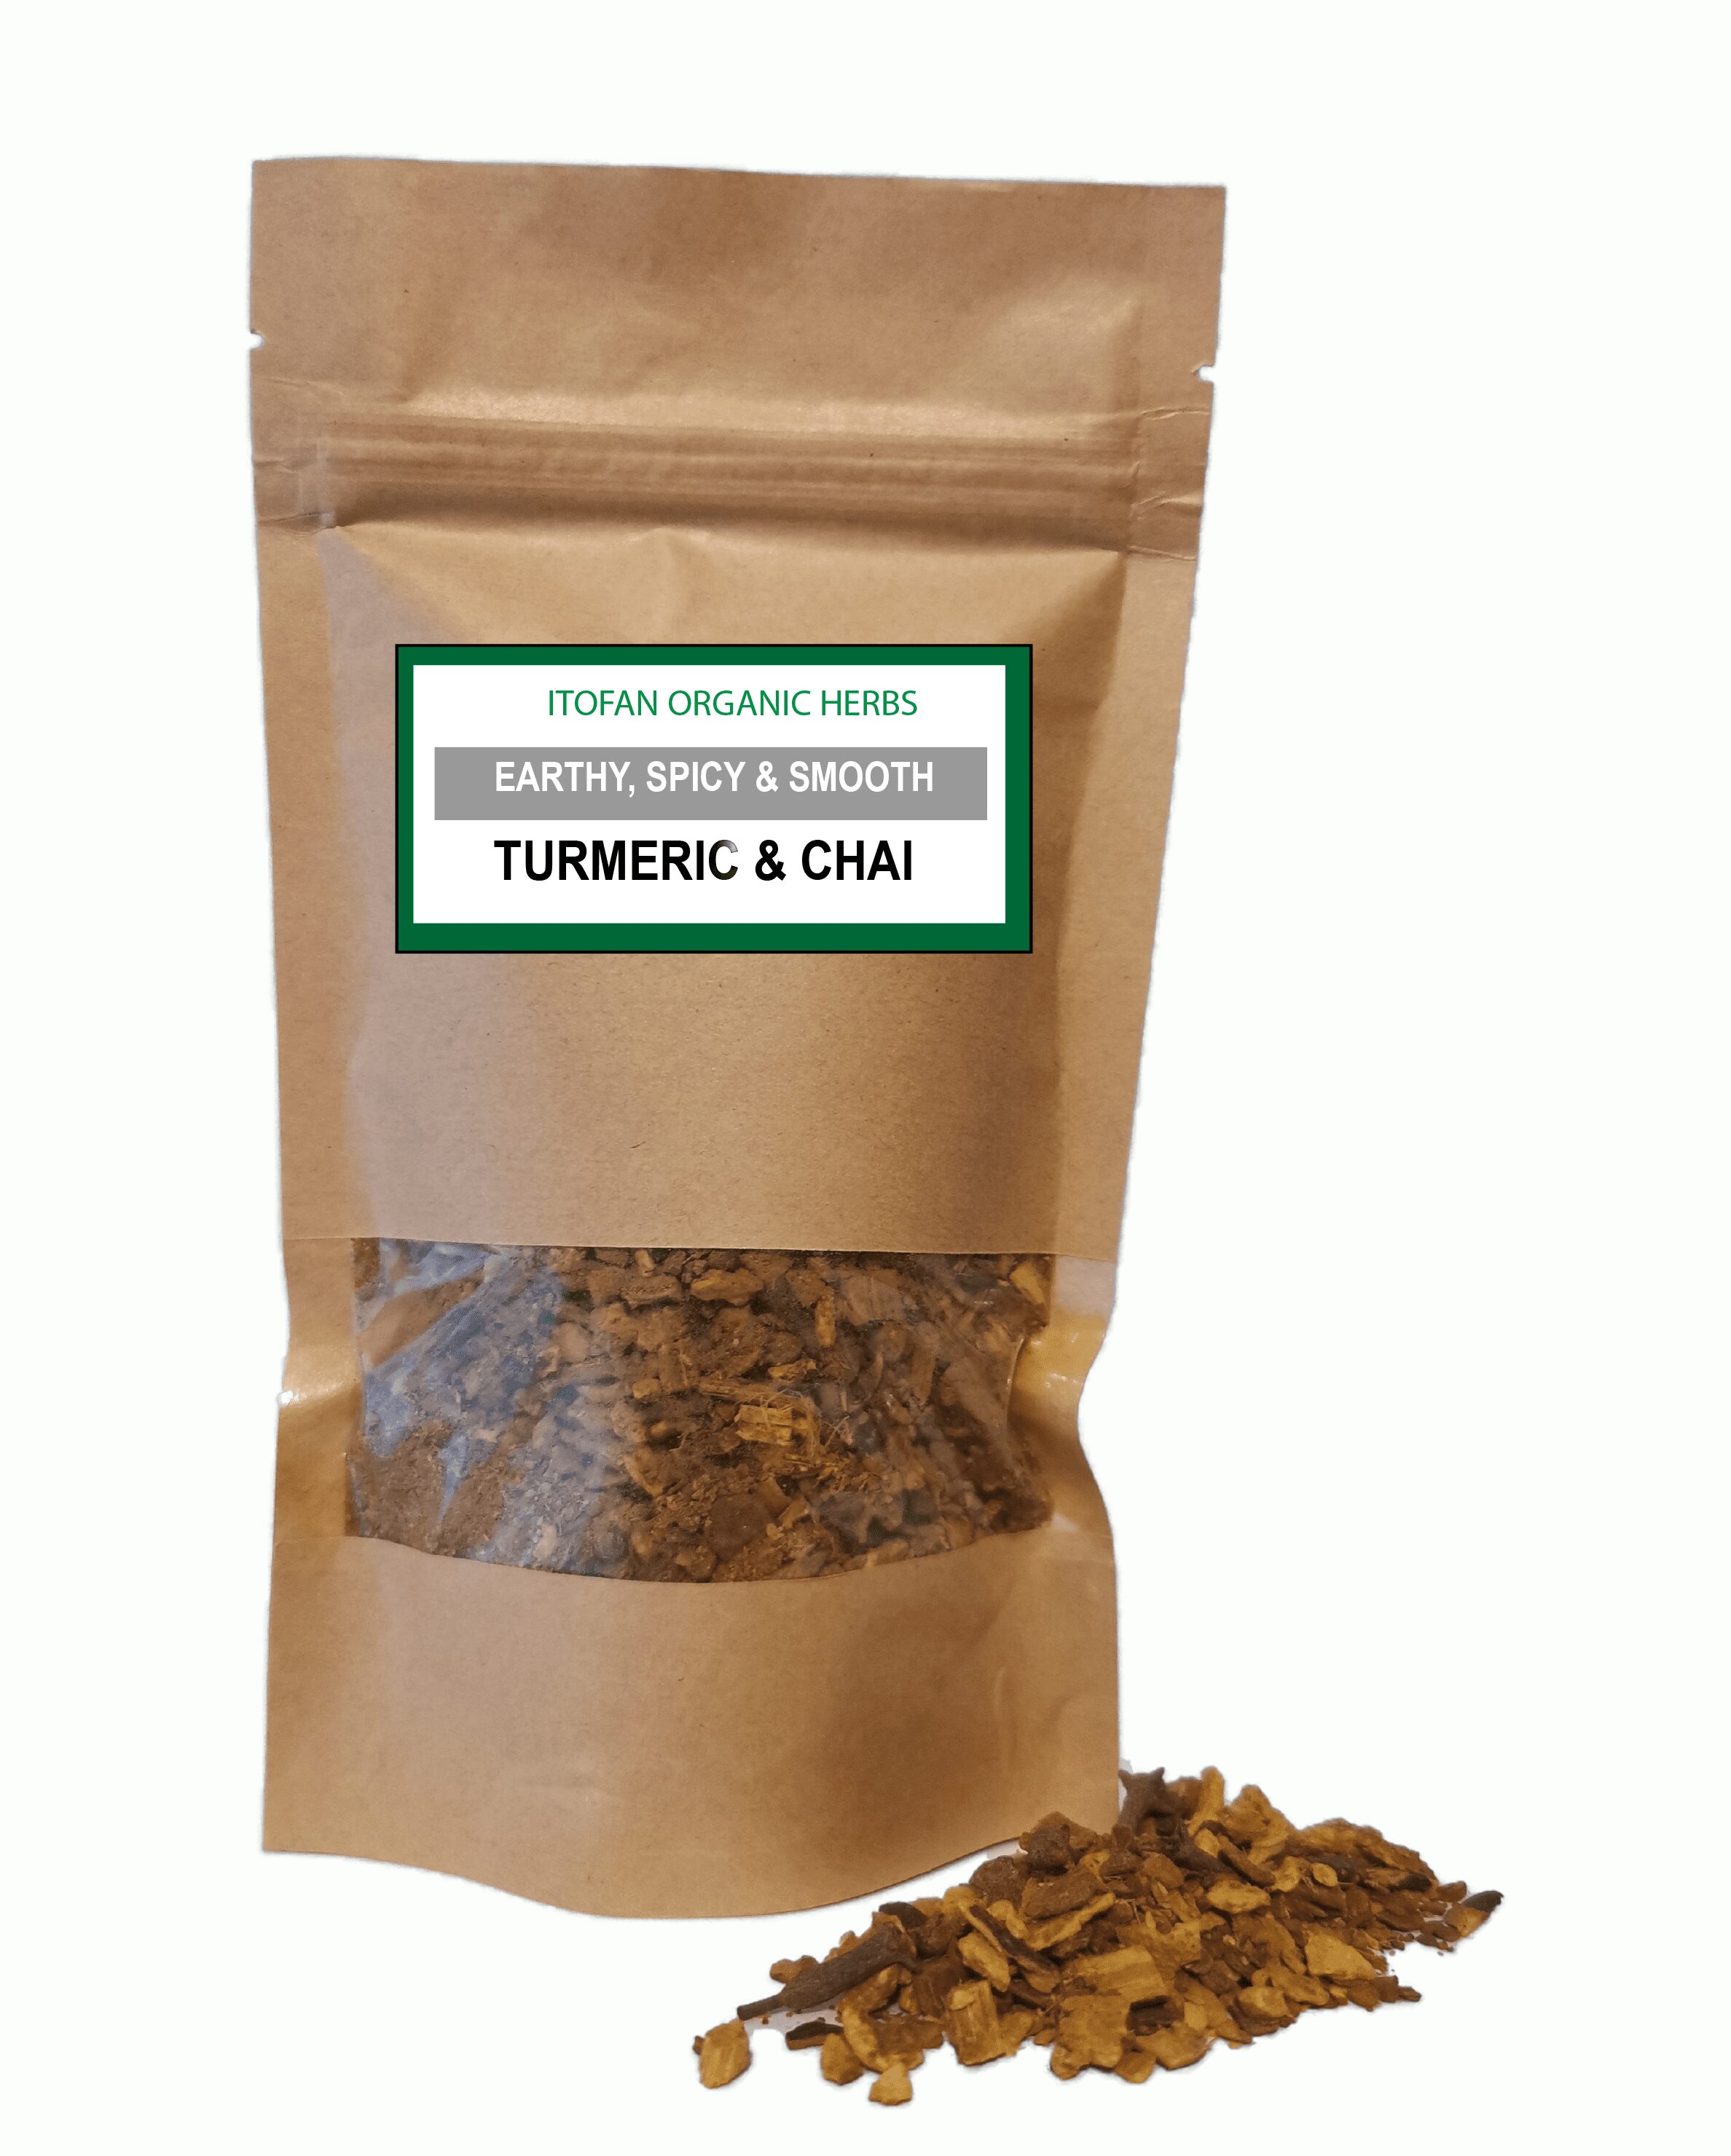 Turmeric & Chai Traditional Herbal Blend